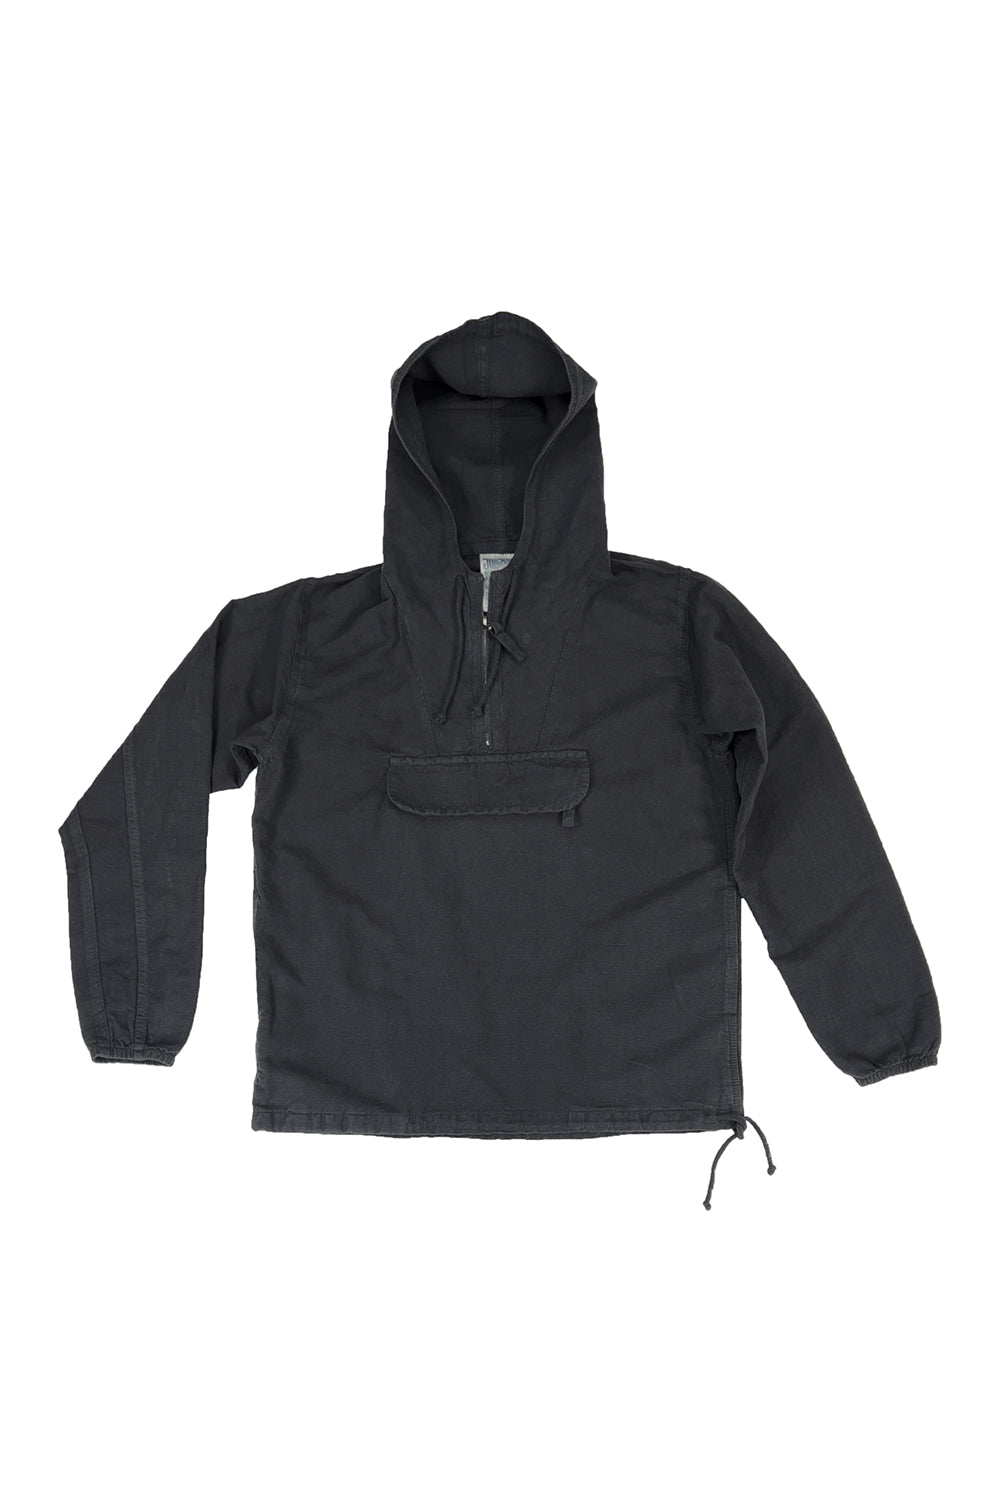 Shoreline Anorak Jacket | Jungmaven Hemp Clothing & Accessories / Color: Black